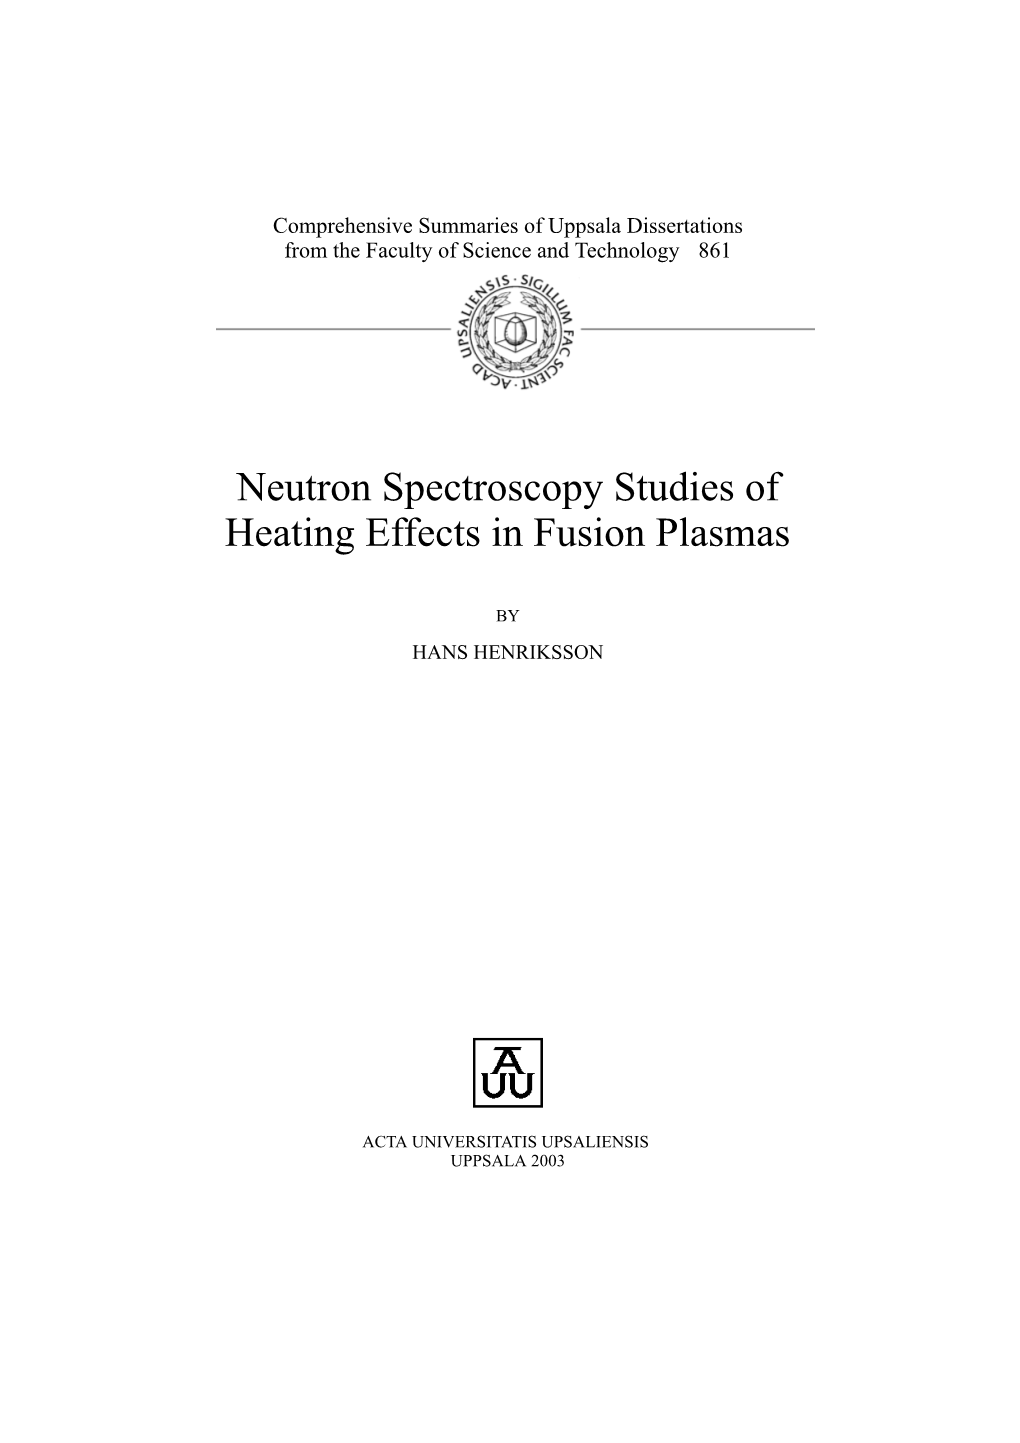 Neutron Spectroscopy Studies of Heating Effects in Fusion Plasmas